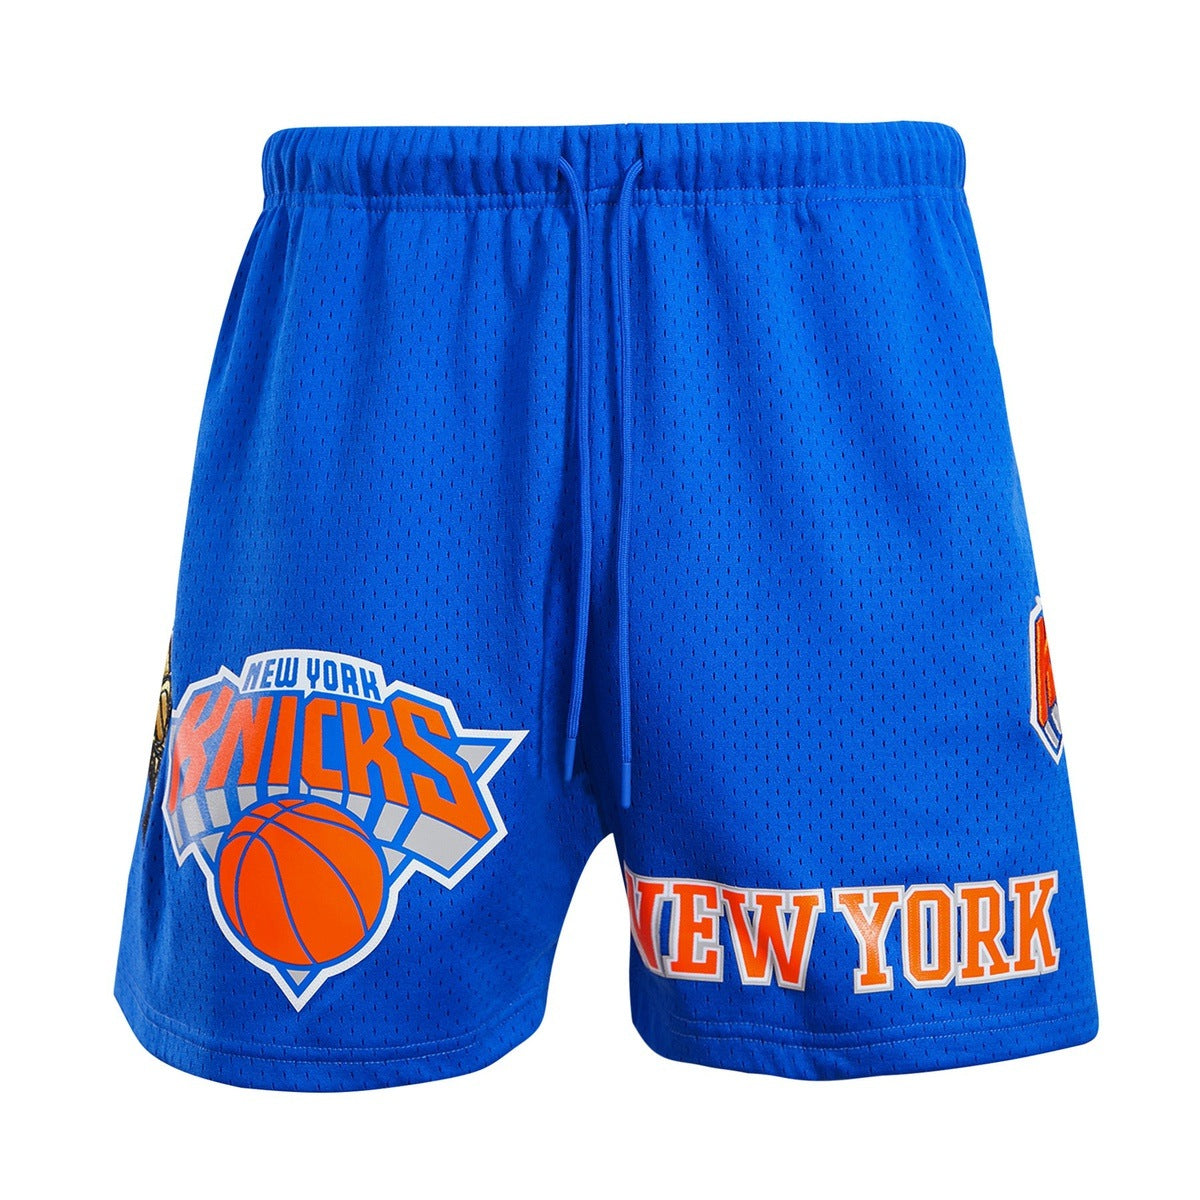 NBA NEW YORK KNICKS LOGO MEN'S MESH SHORT (ROYAL BLUE)